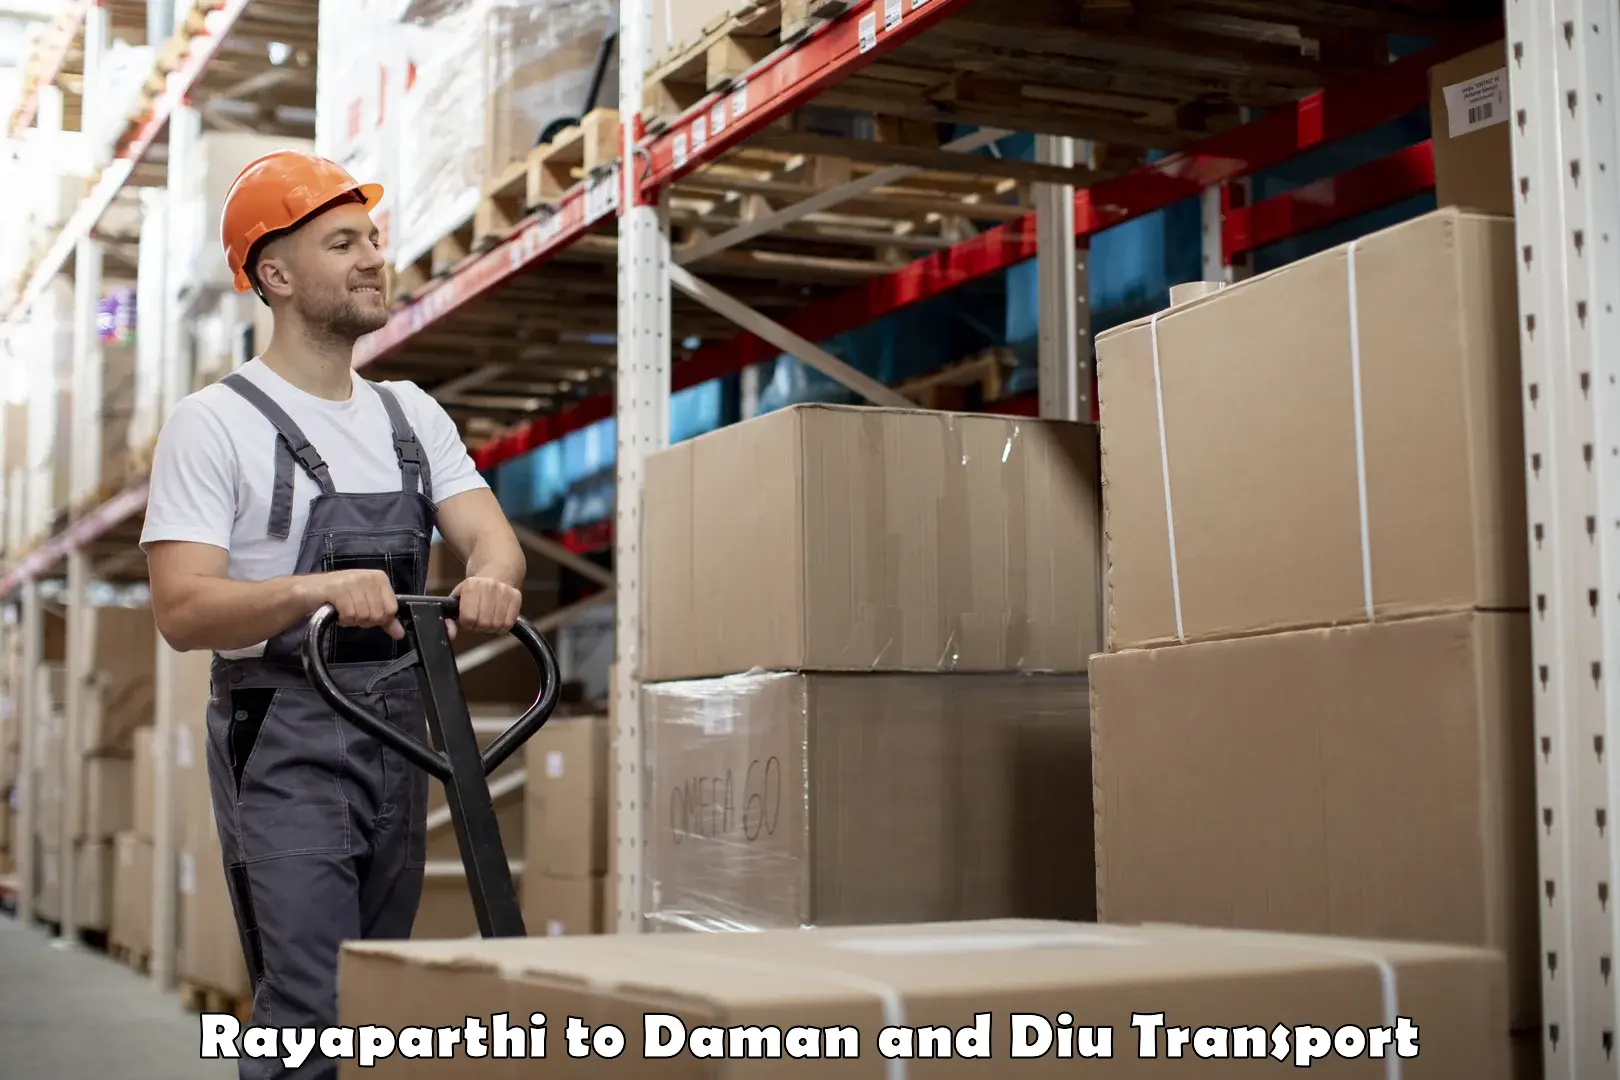 Delivery service Rayaparthi to Daman